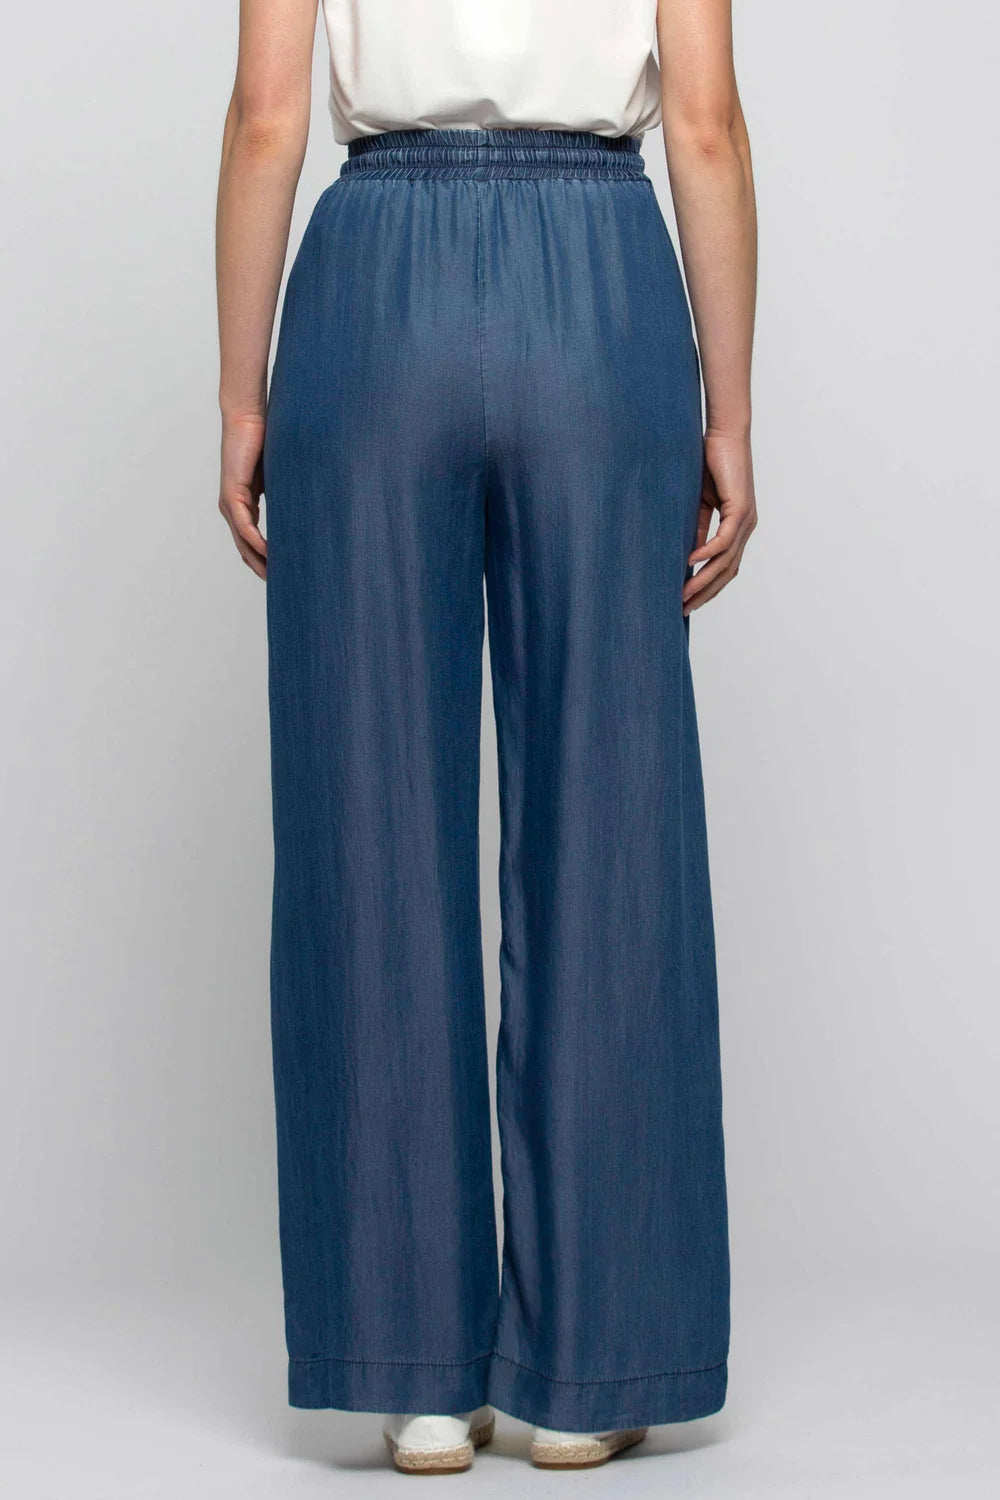 Pantalone con Coulisse Kocca / Jeans - Ideal Moda